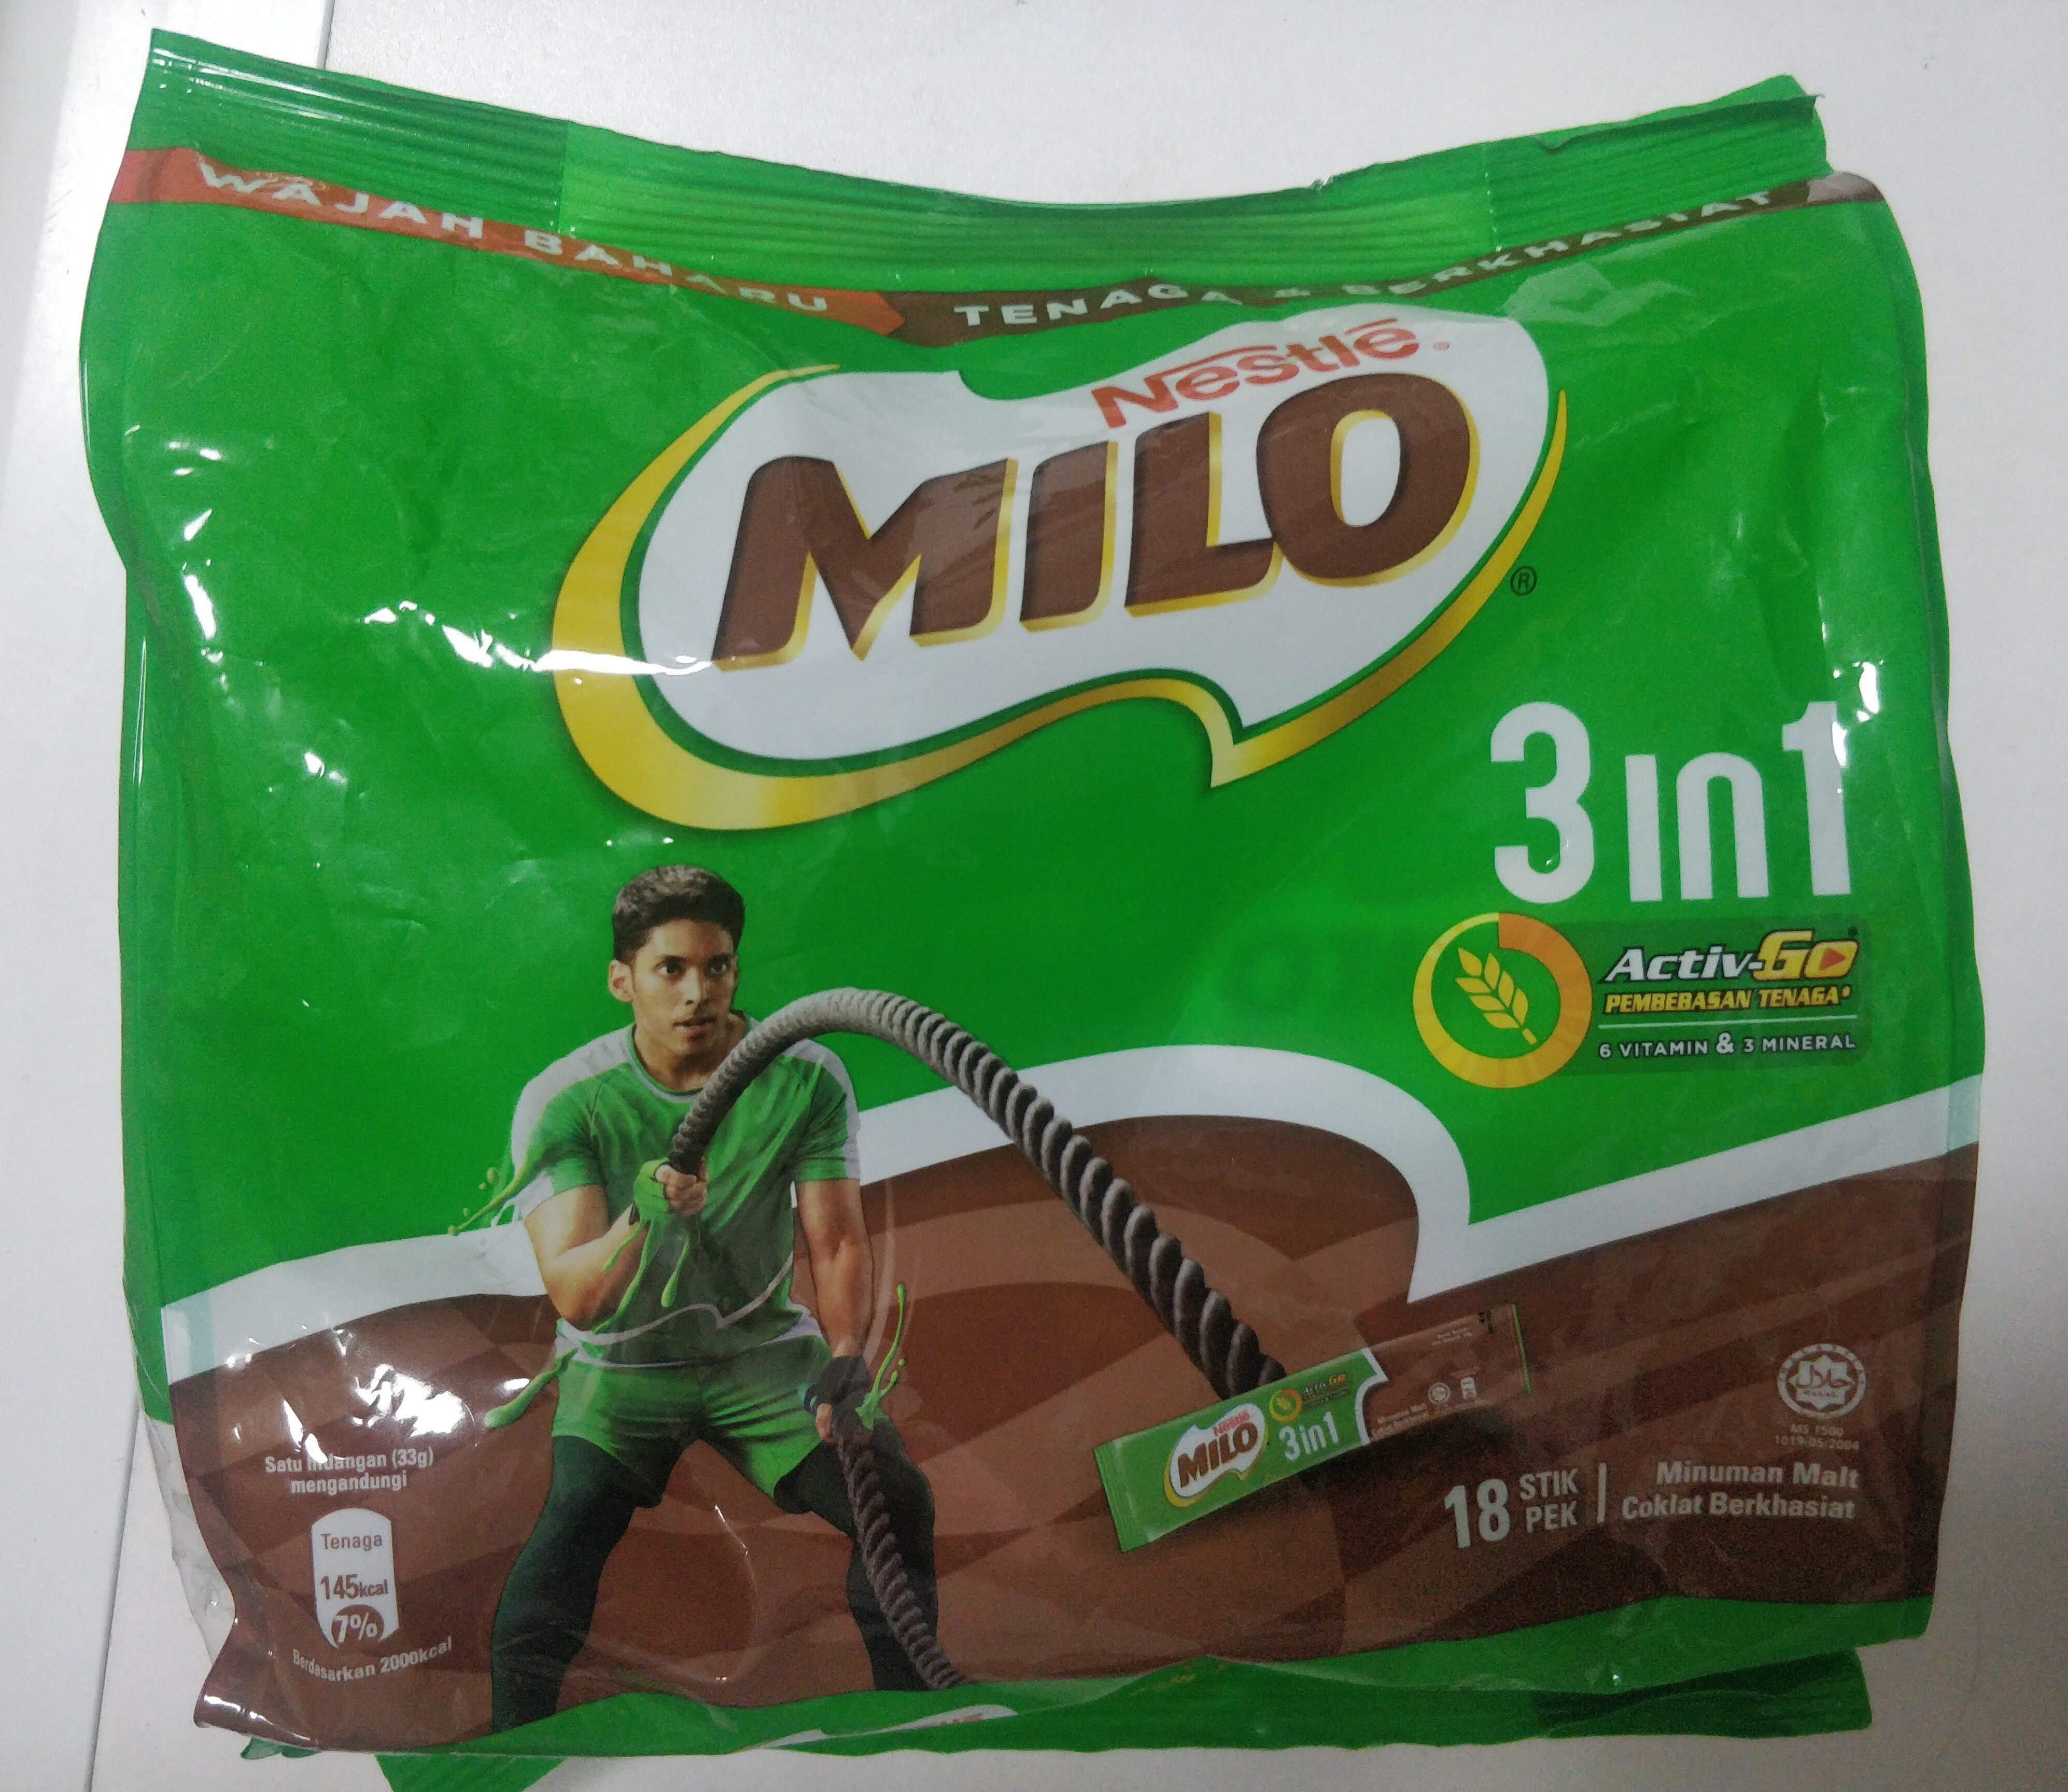 Milo 3 in 1 - Product